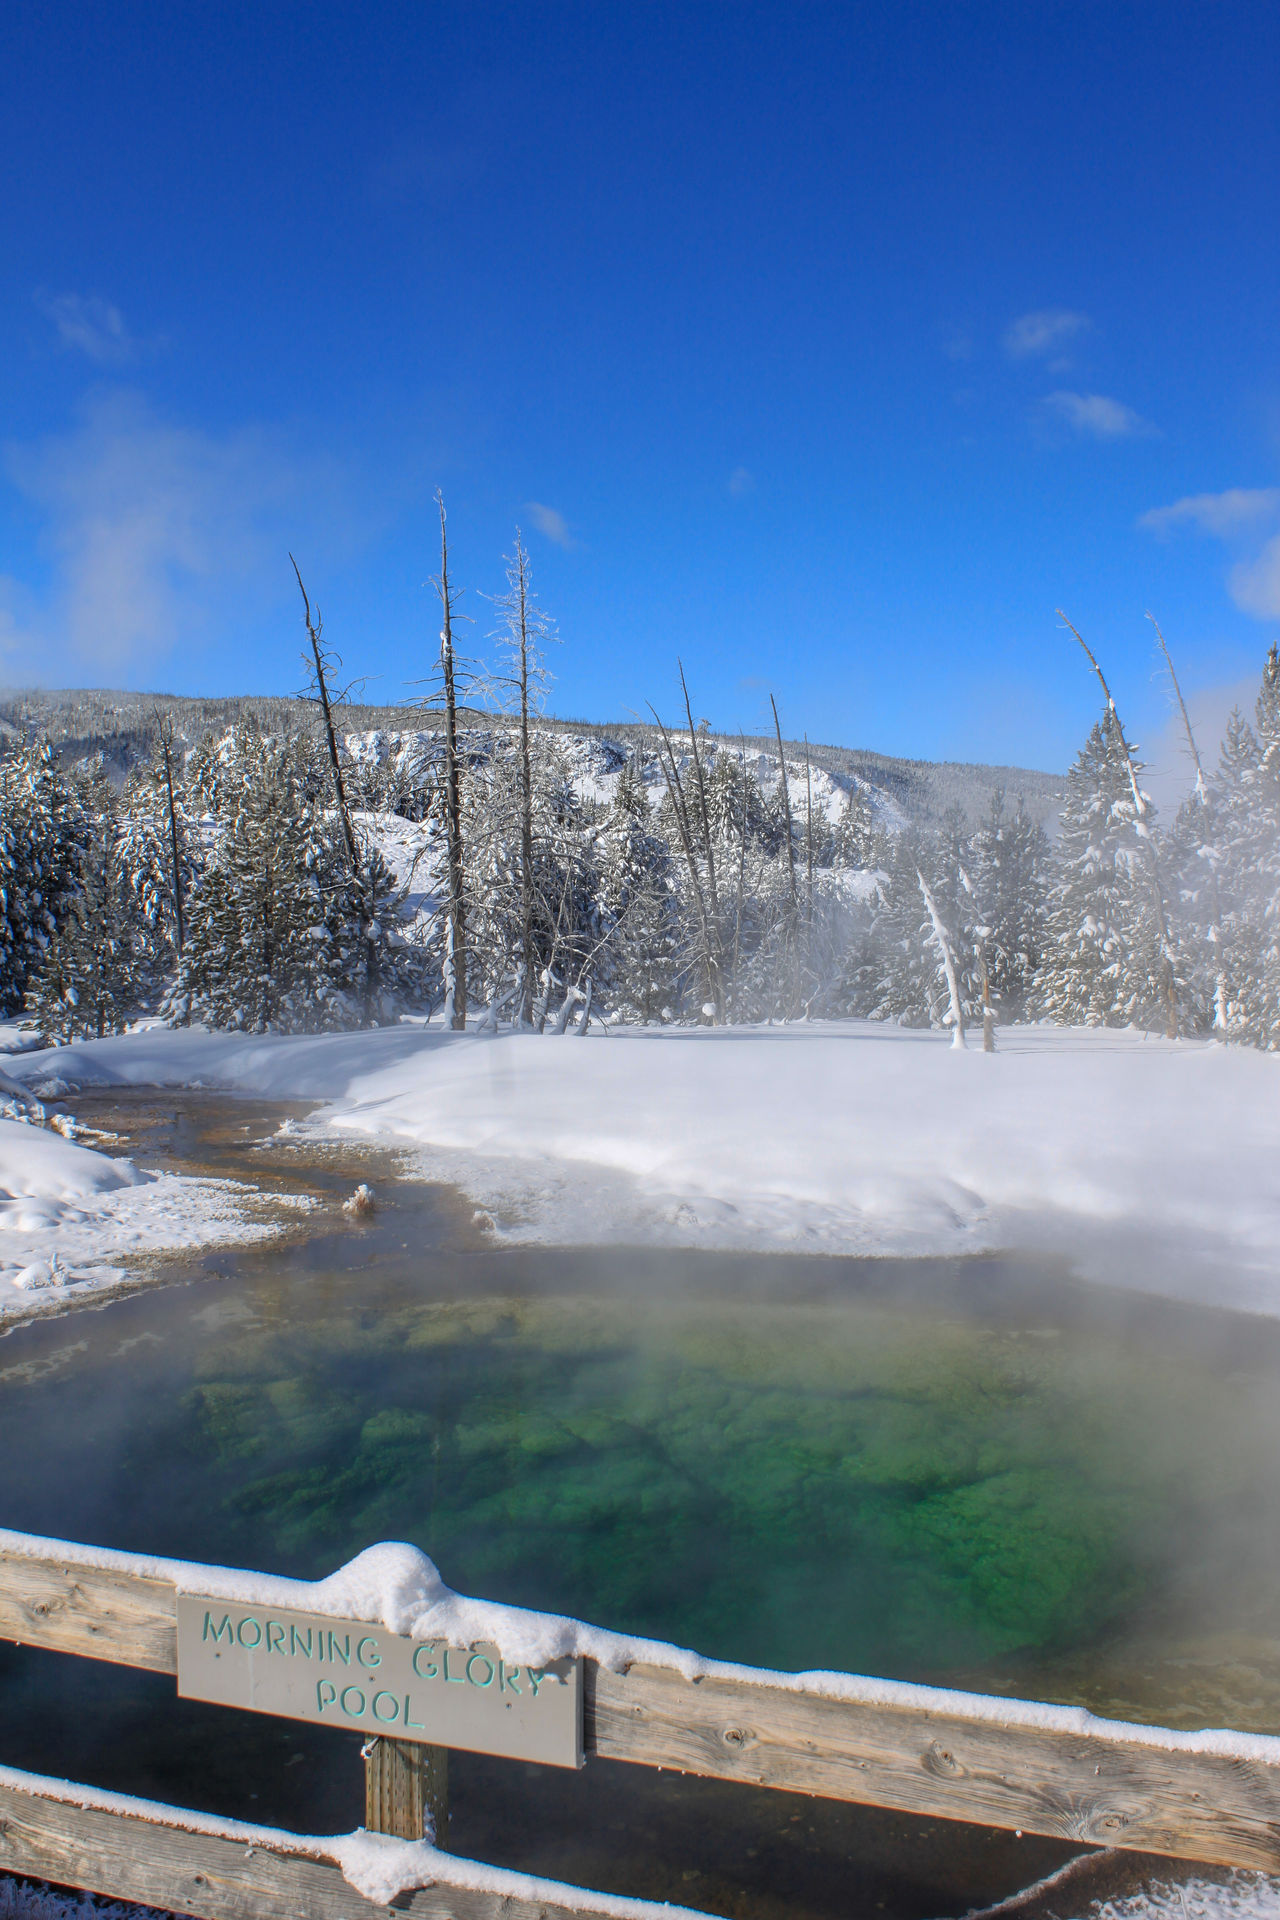 La Morning Glory Pool de Yellowstone.